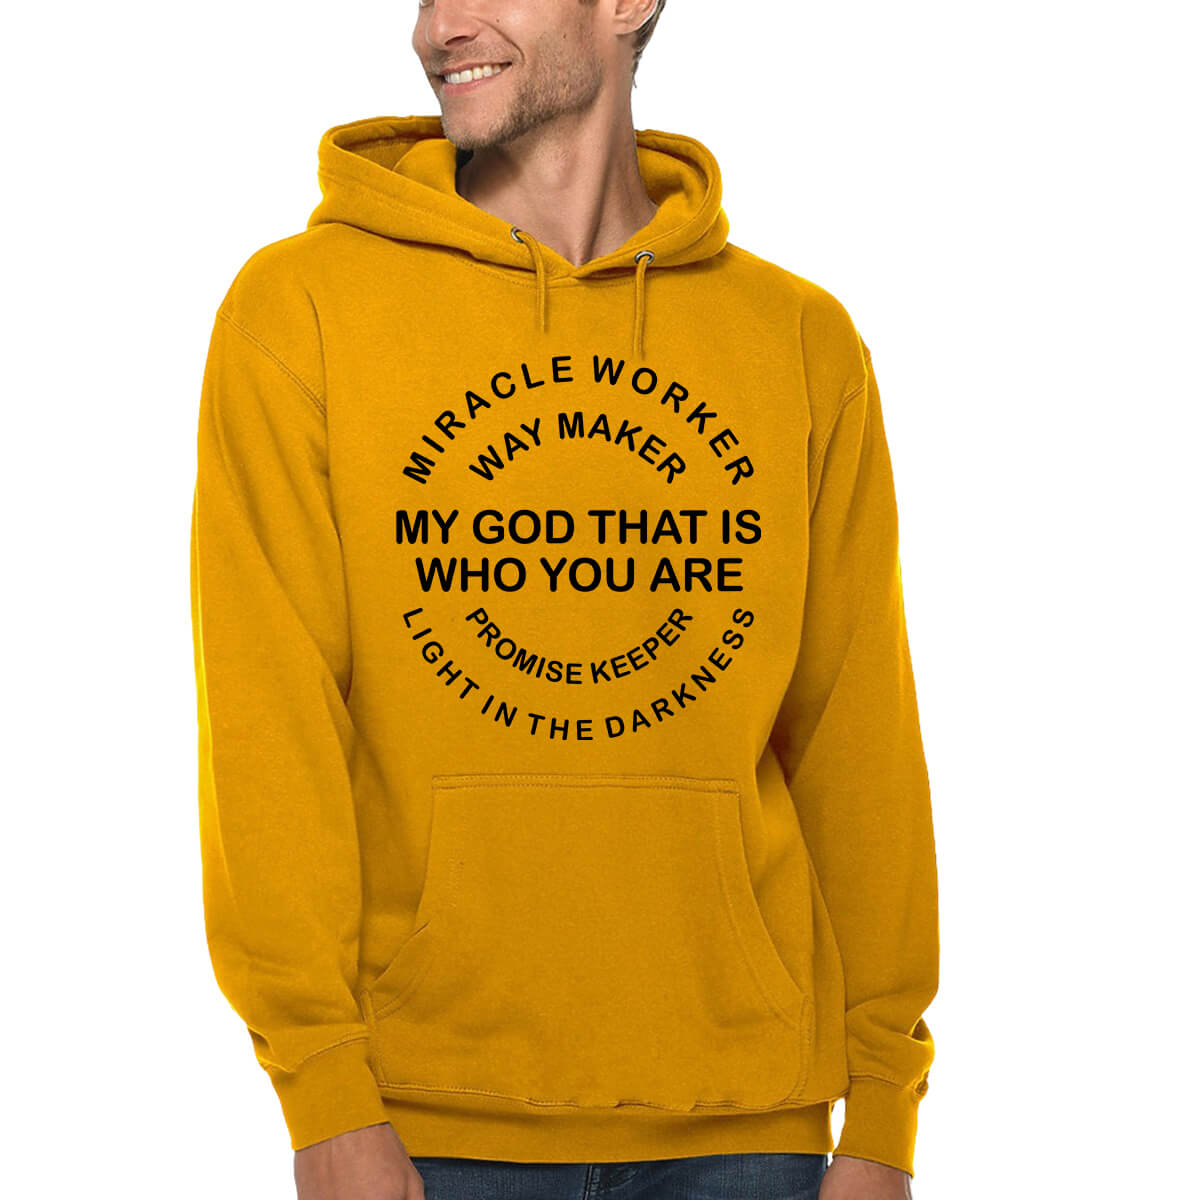 WayMaker Miracle Worker Men's Sweatshirt Hoodie